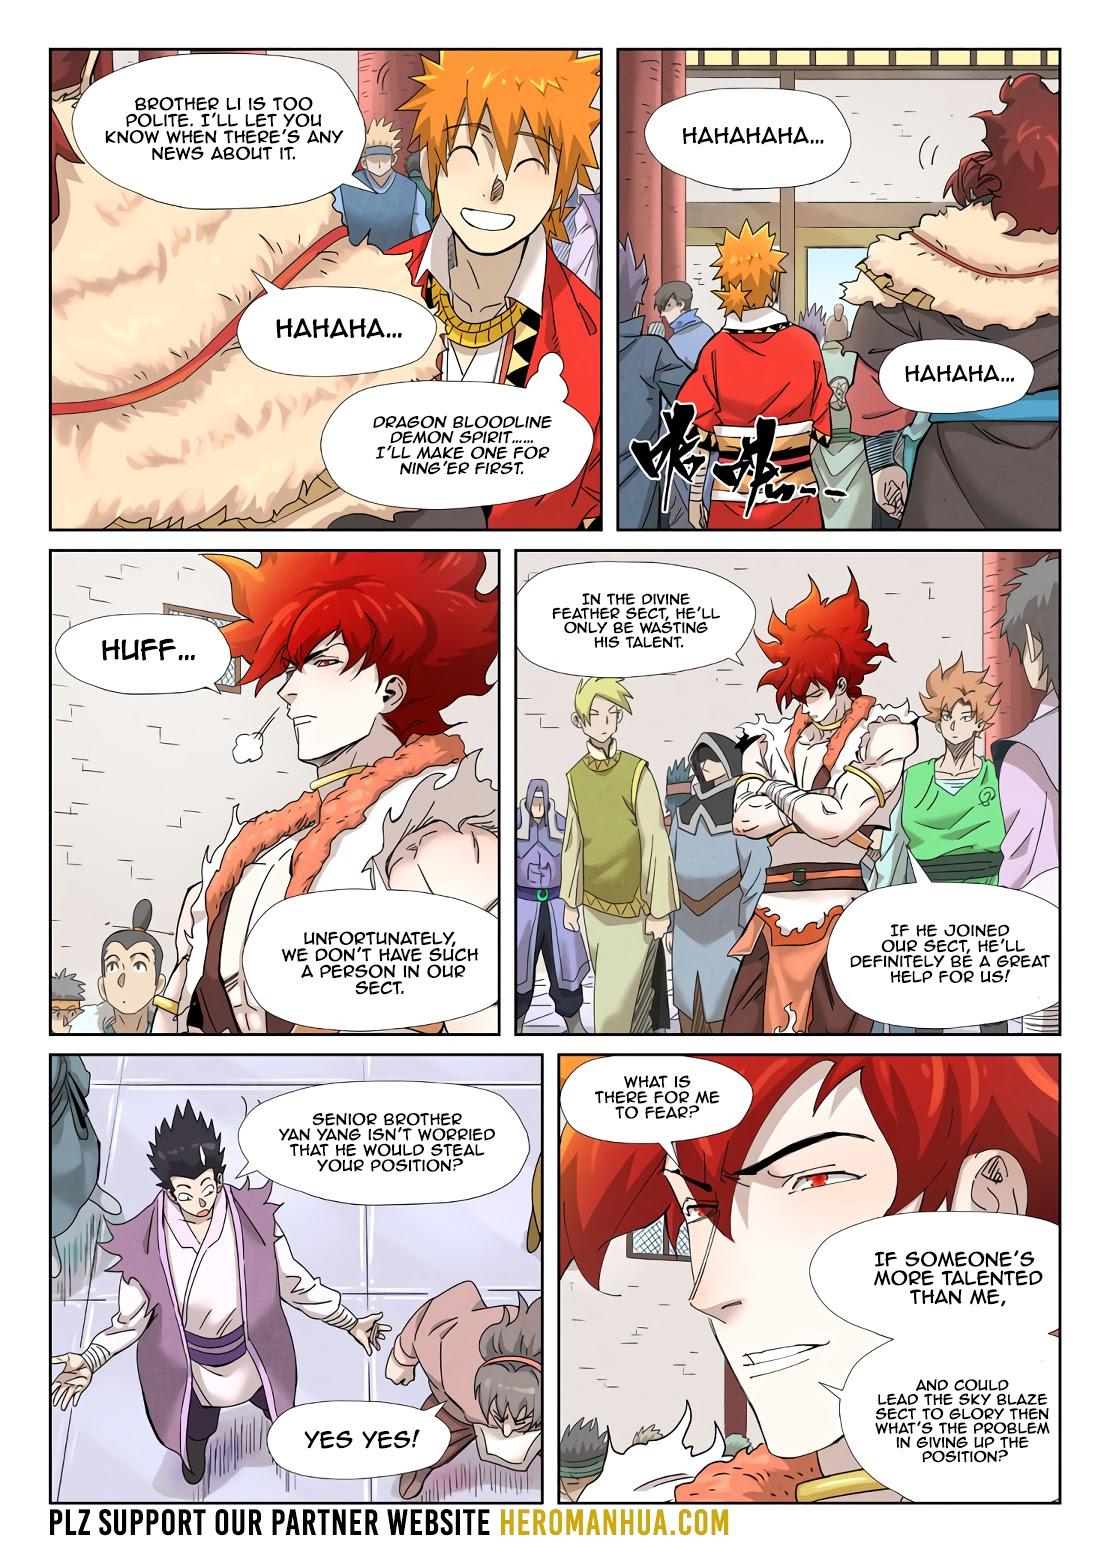 Tales Of Demons And Gods Chapter 343.1 page 4 - Mangakakalot